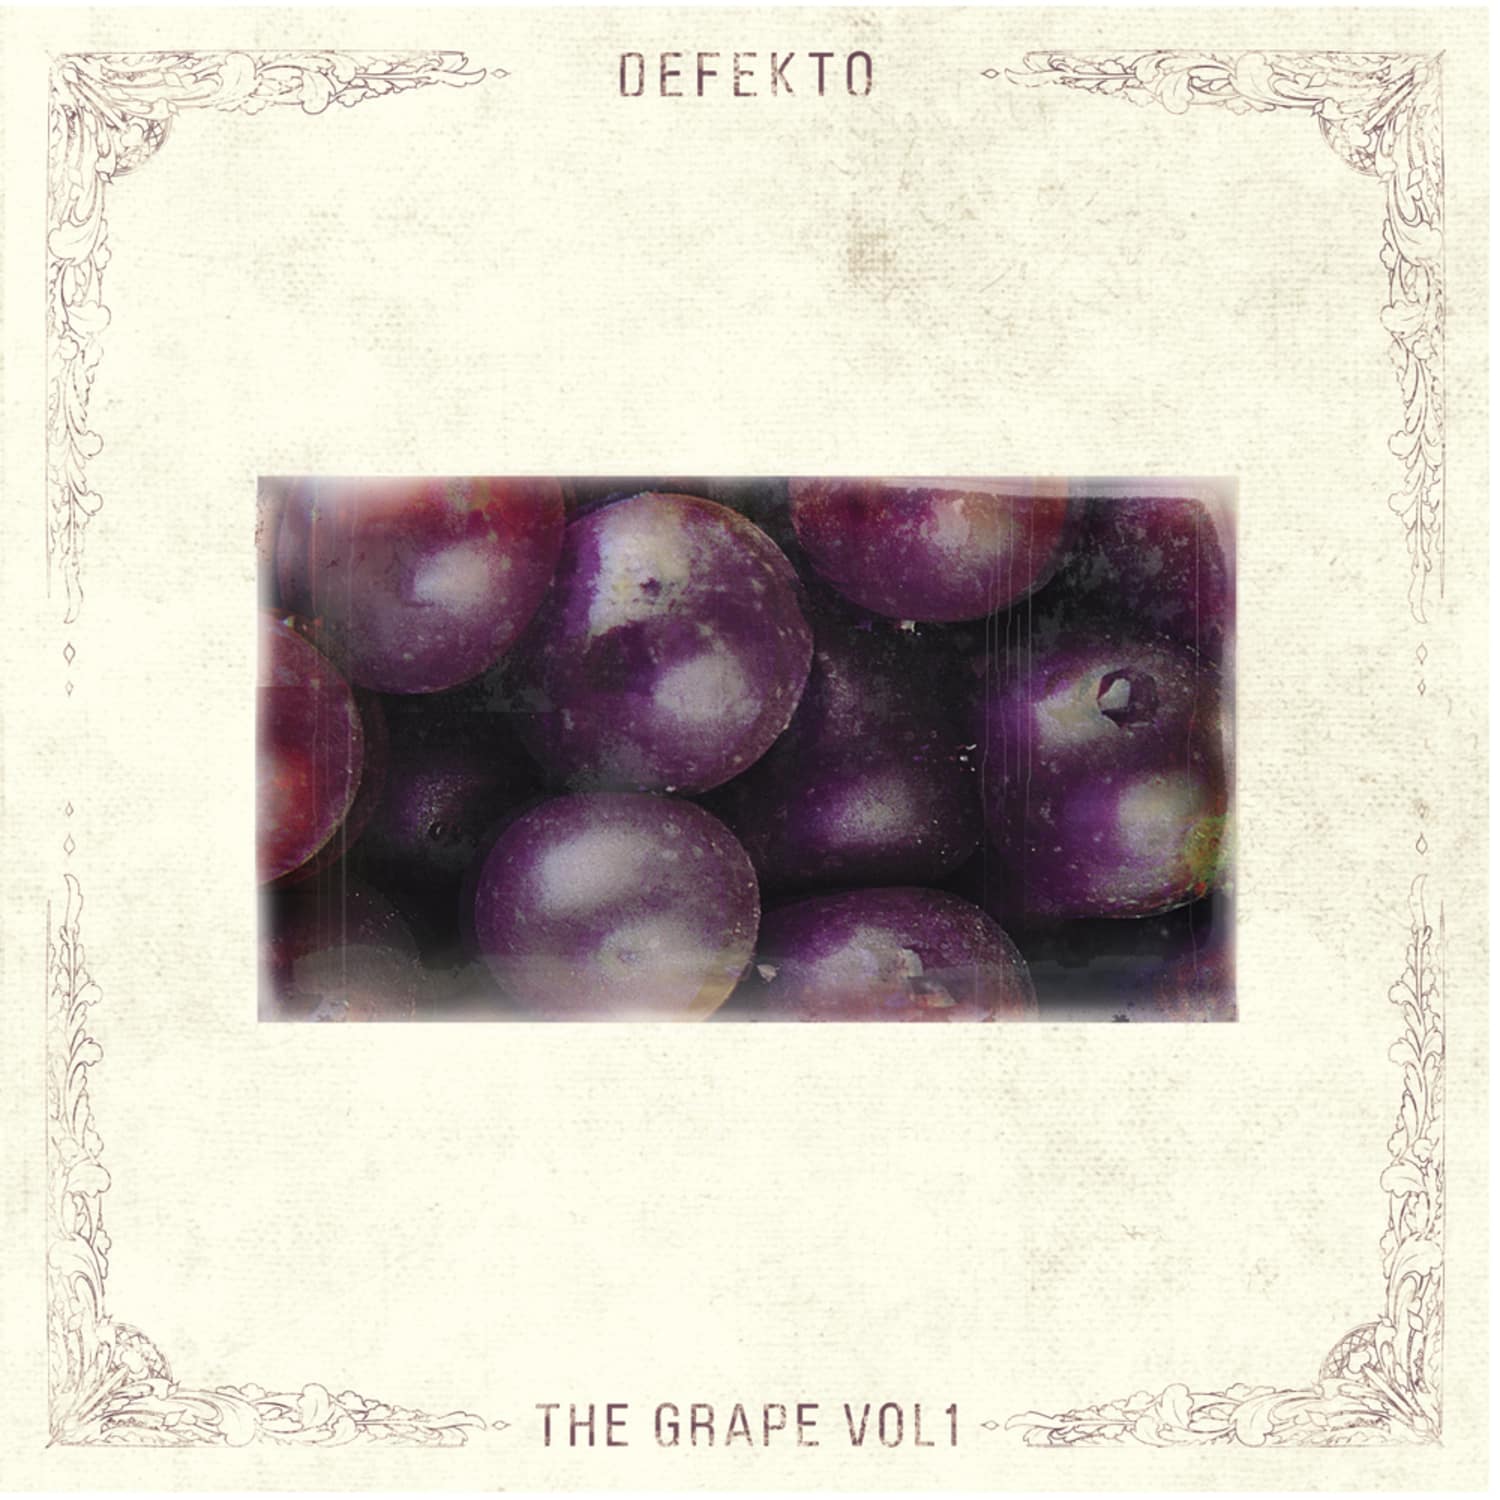 Defekto - THE GRAPE VOL 1 